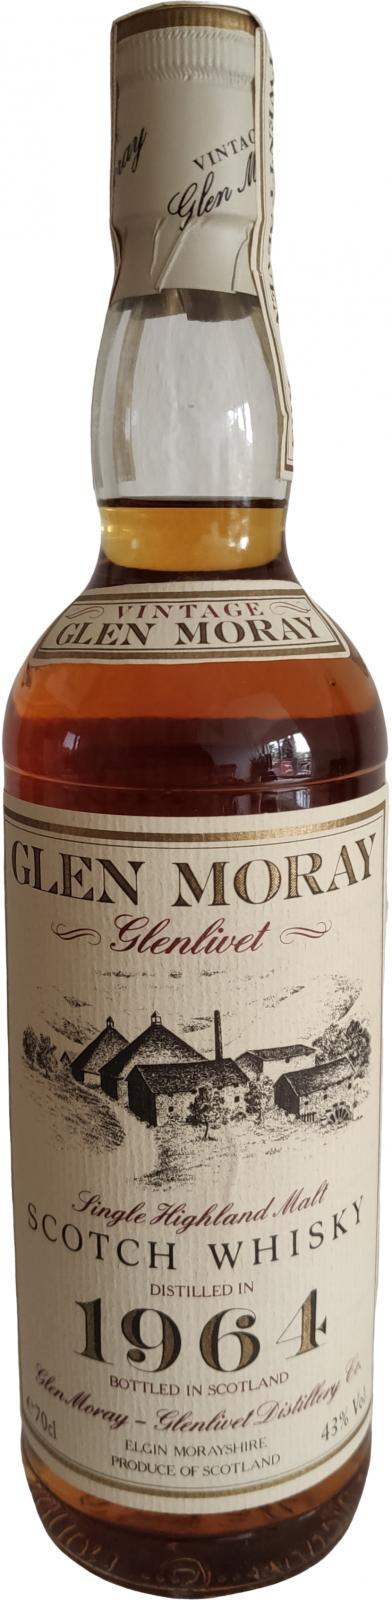 Glen Moray 1964 43% 700ml